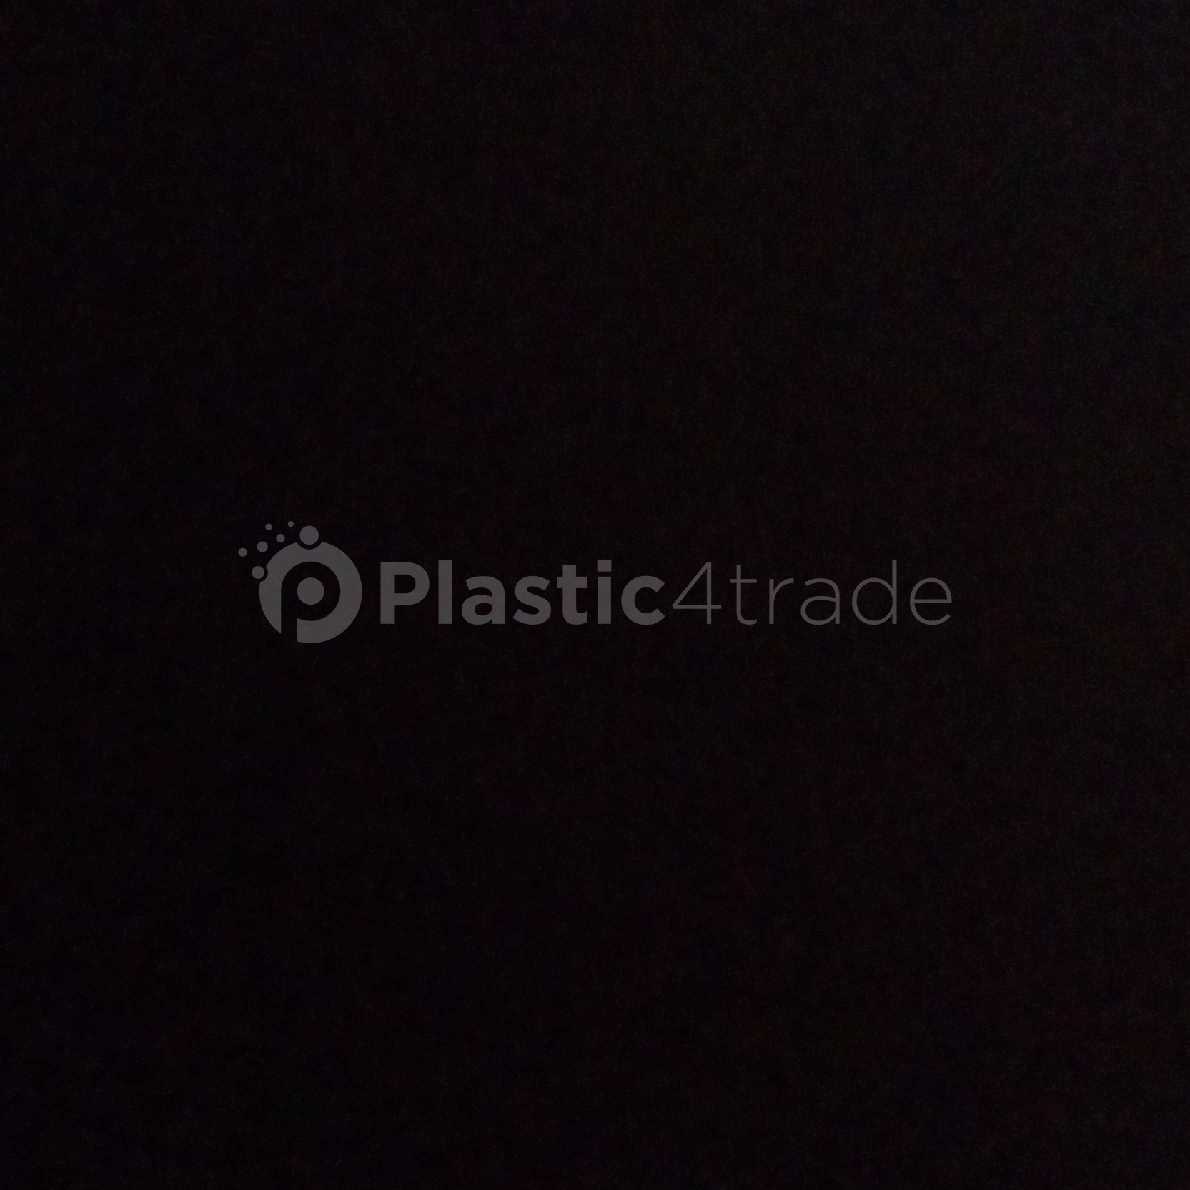 ALL PLASTIC SCRAP HDPE Resin Blow surat gujarat india Plastic4trade